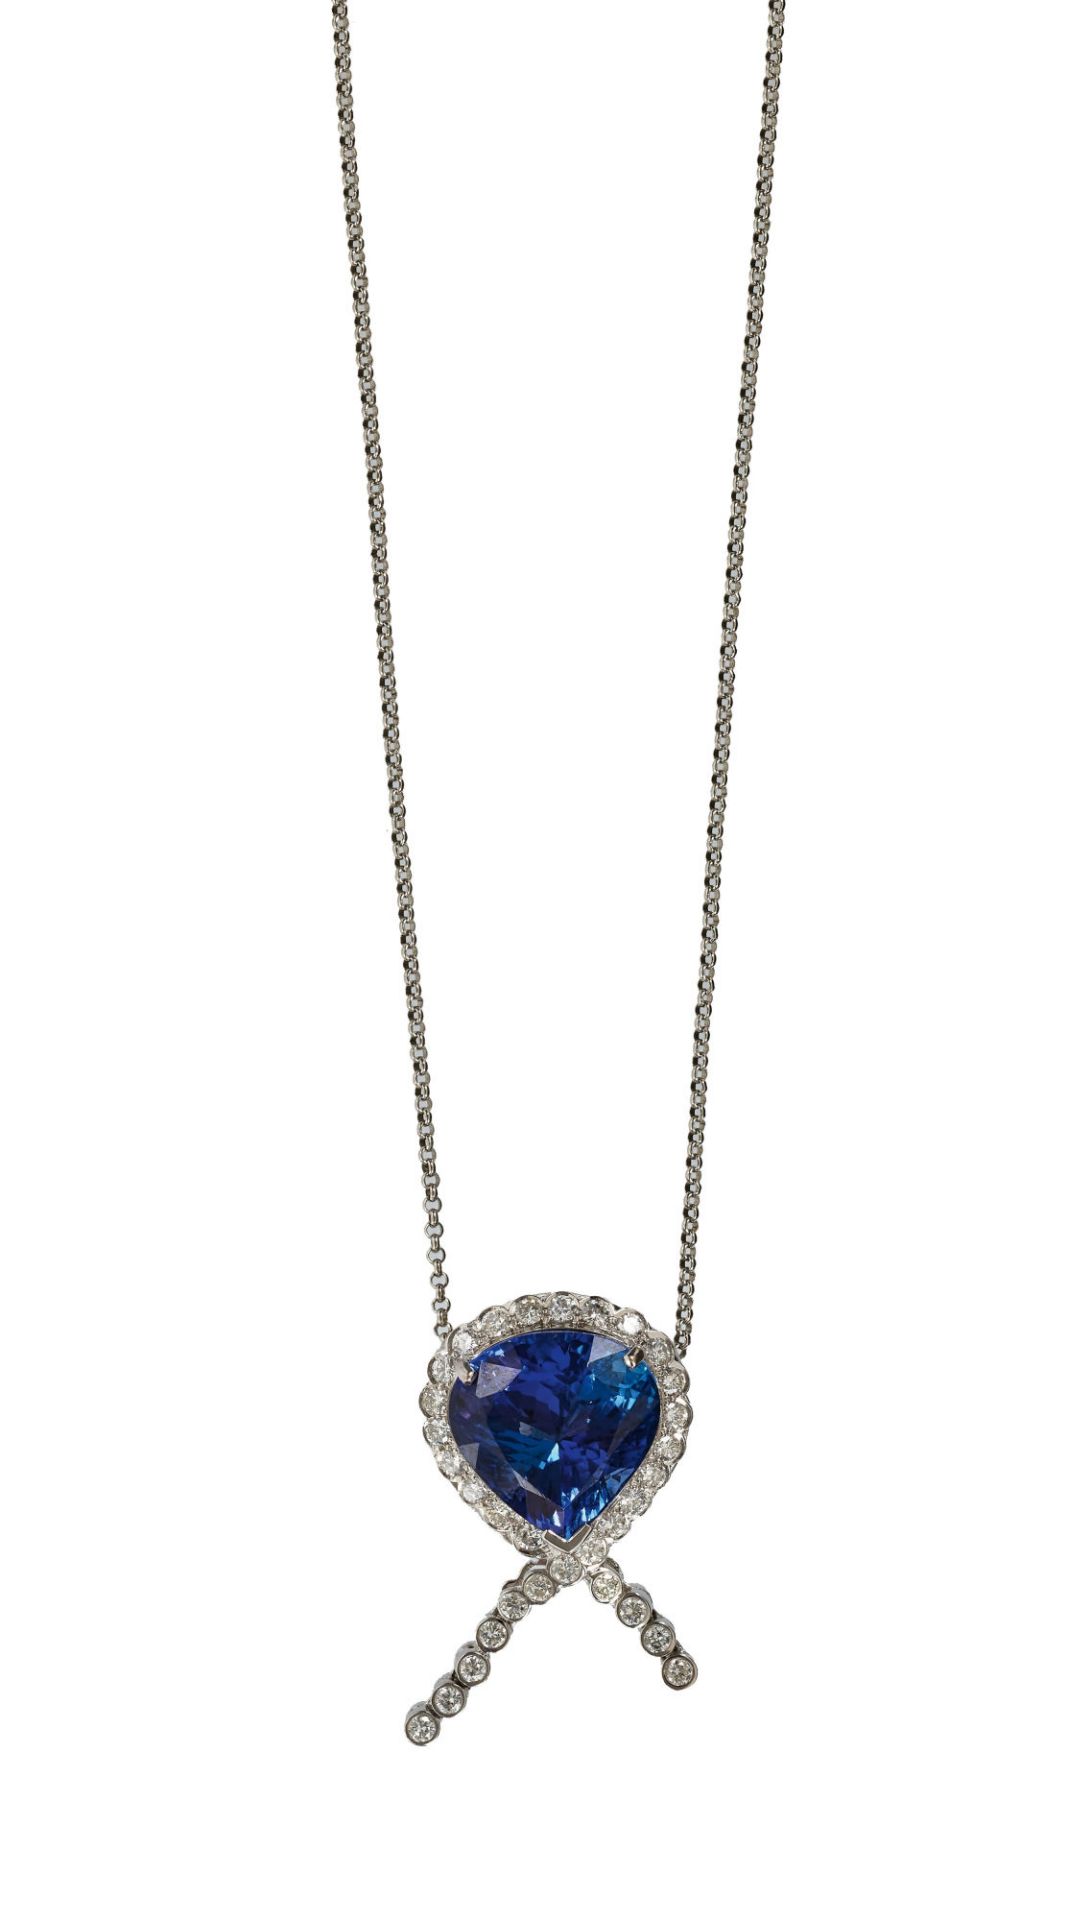 TANSANIT-BRILLANT-ANHÄNGER MIT KETTE / Tanzanite-diamond-pendant necklace - Image 2 of 2